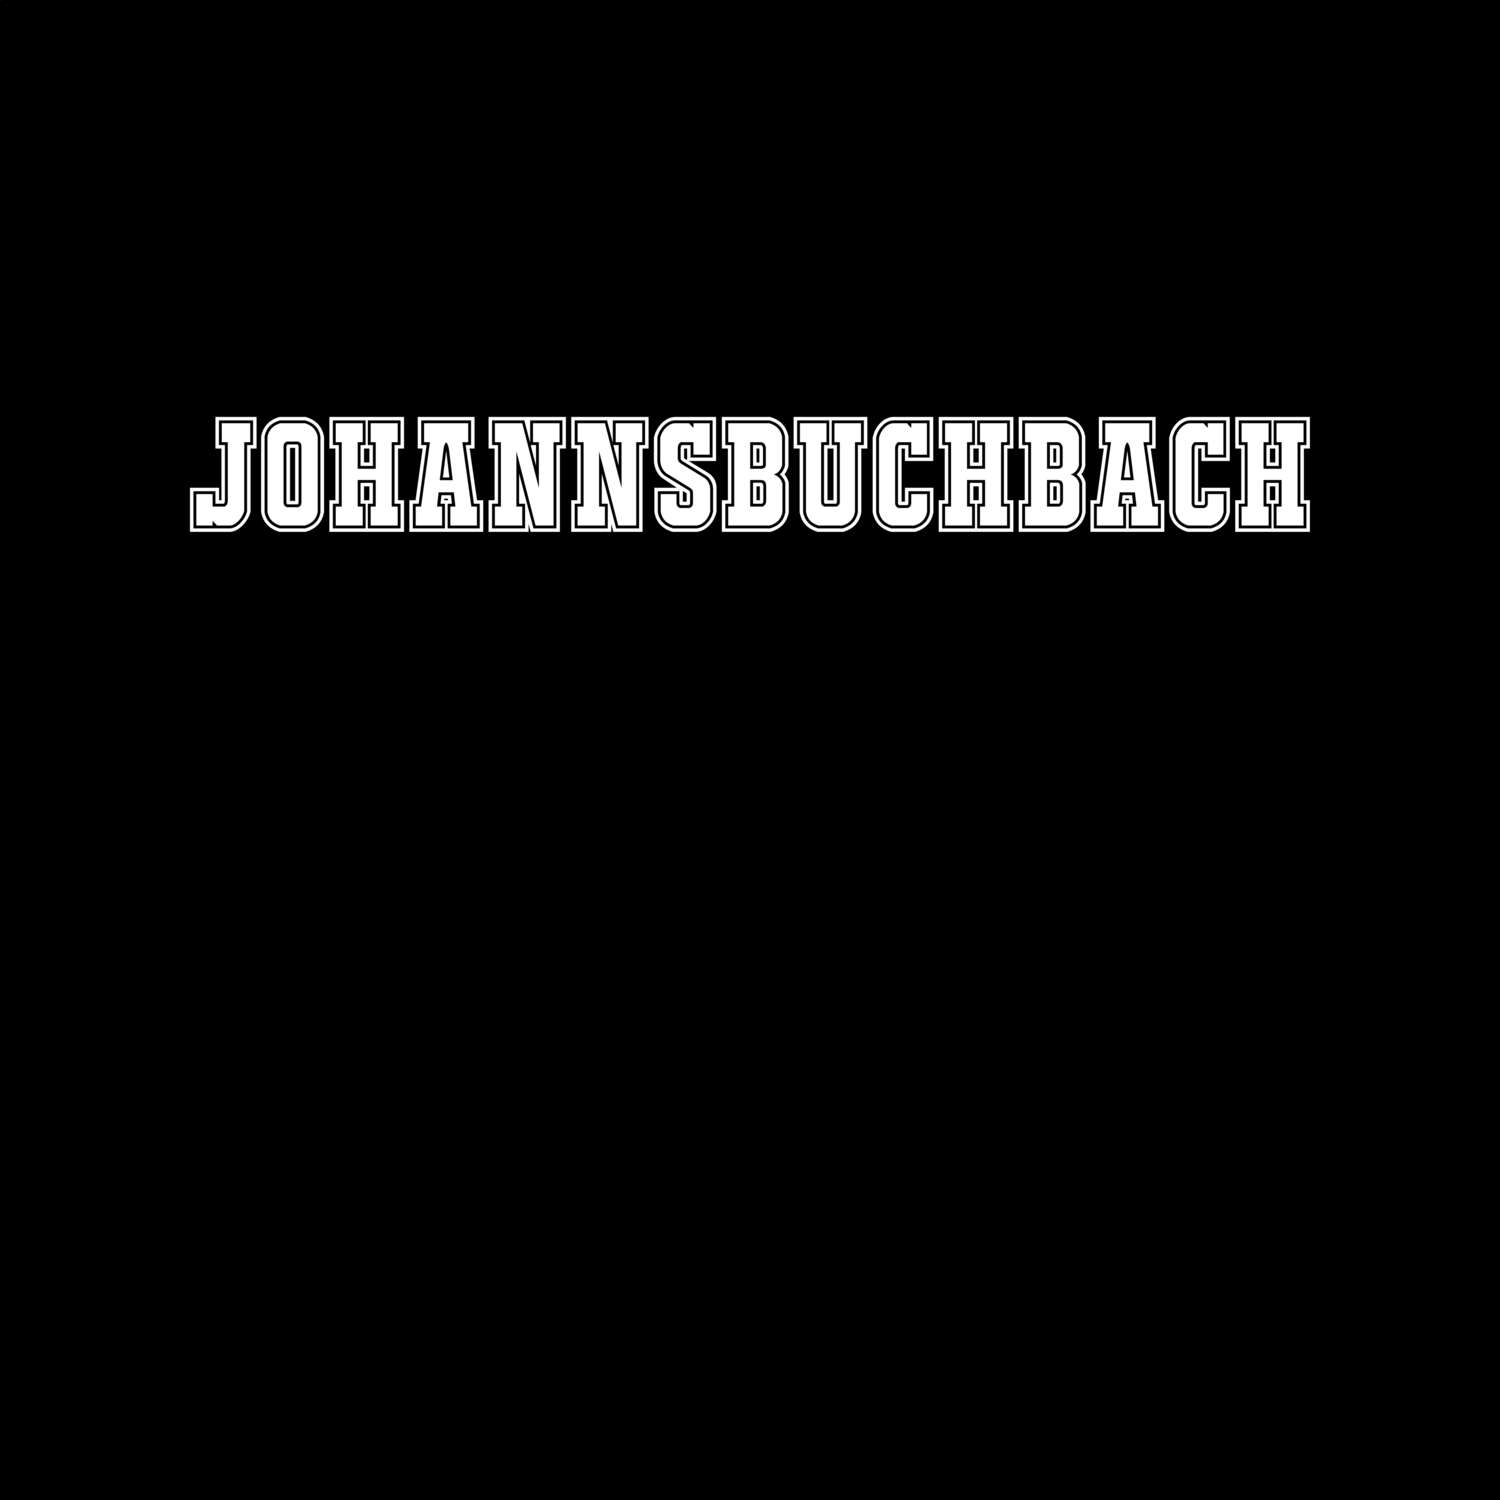 Johannsbuchbach T-Shirt »Classic«